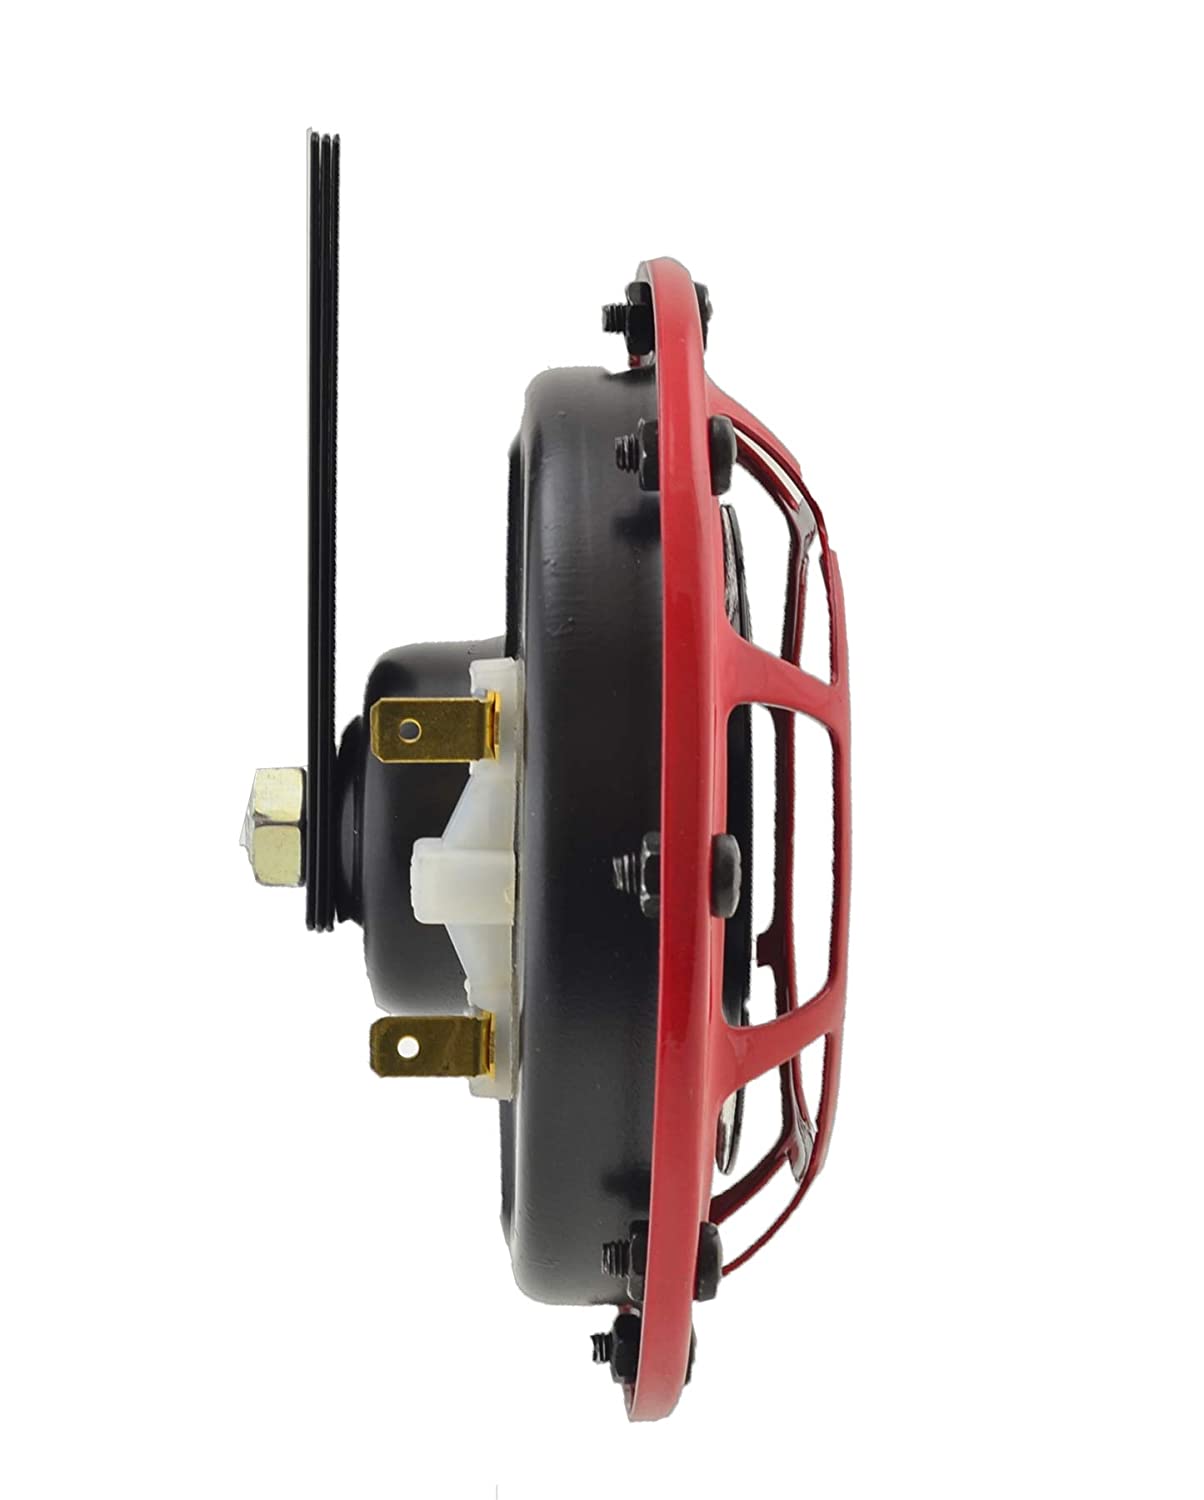 Hella 003.399-842 Grill Super Tone Horn Set for Passenger Car (Red, 12V, 300/500 Hz, 105-118 dB @ 2 m)